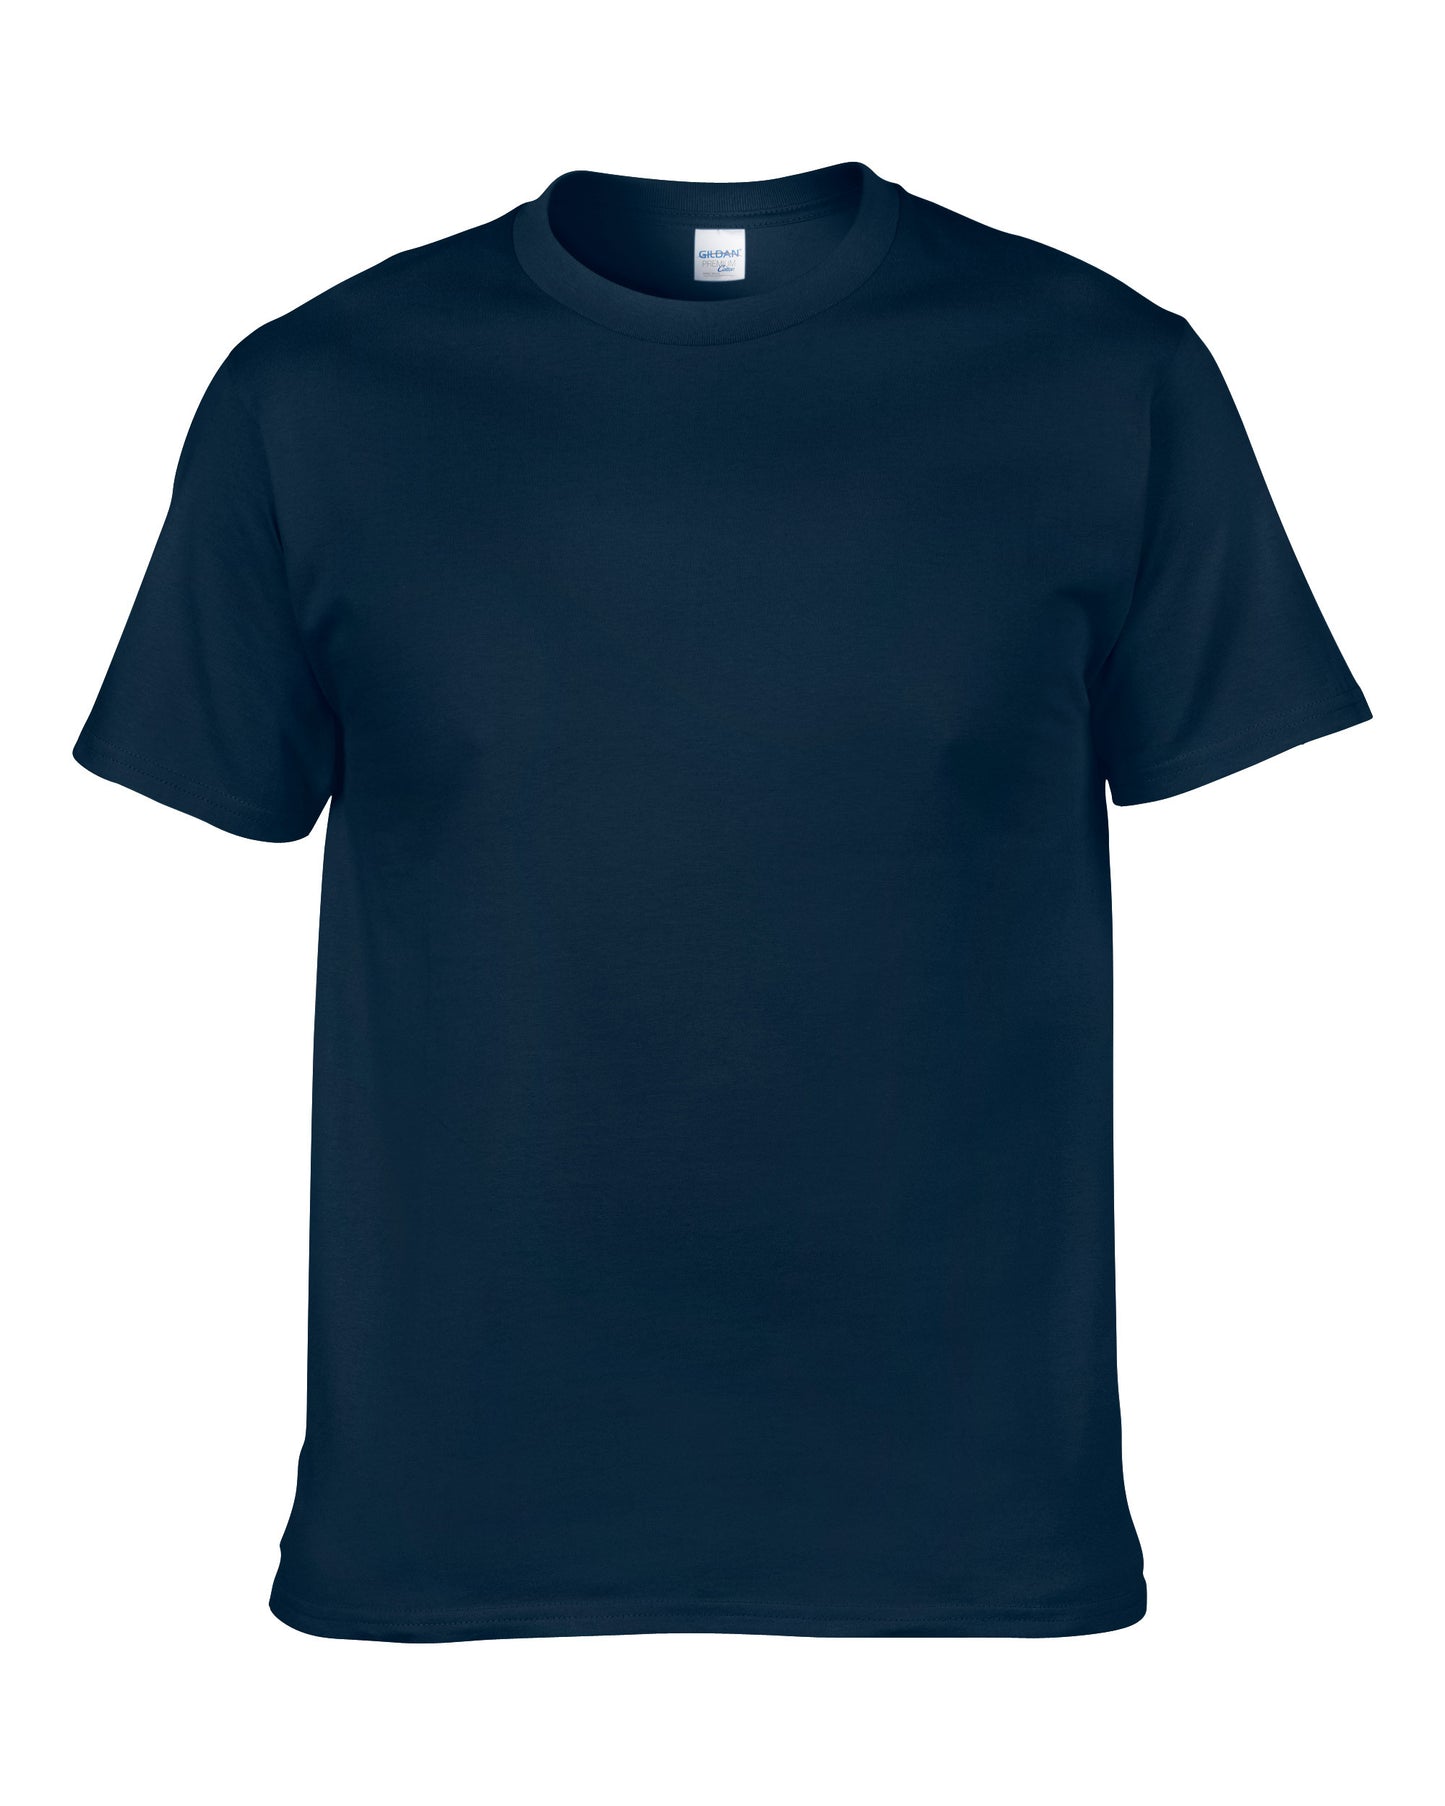 Black Short Sleeve Round Neck T-shirt